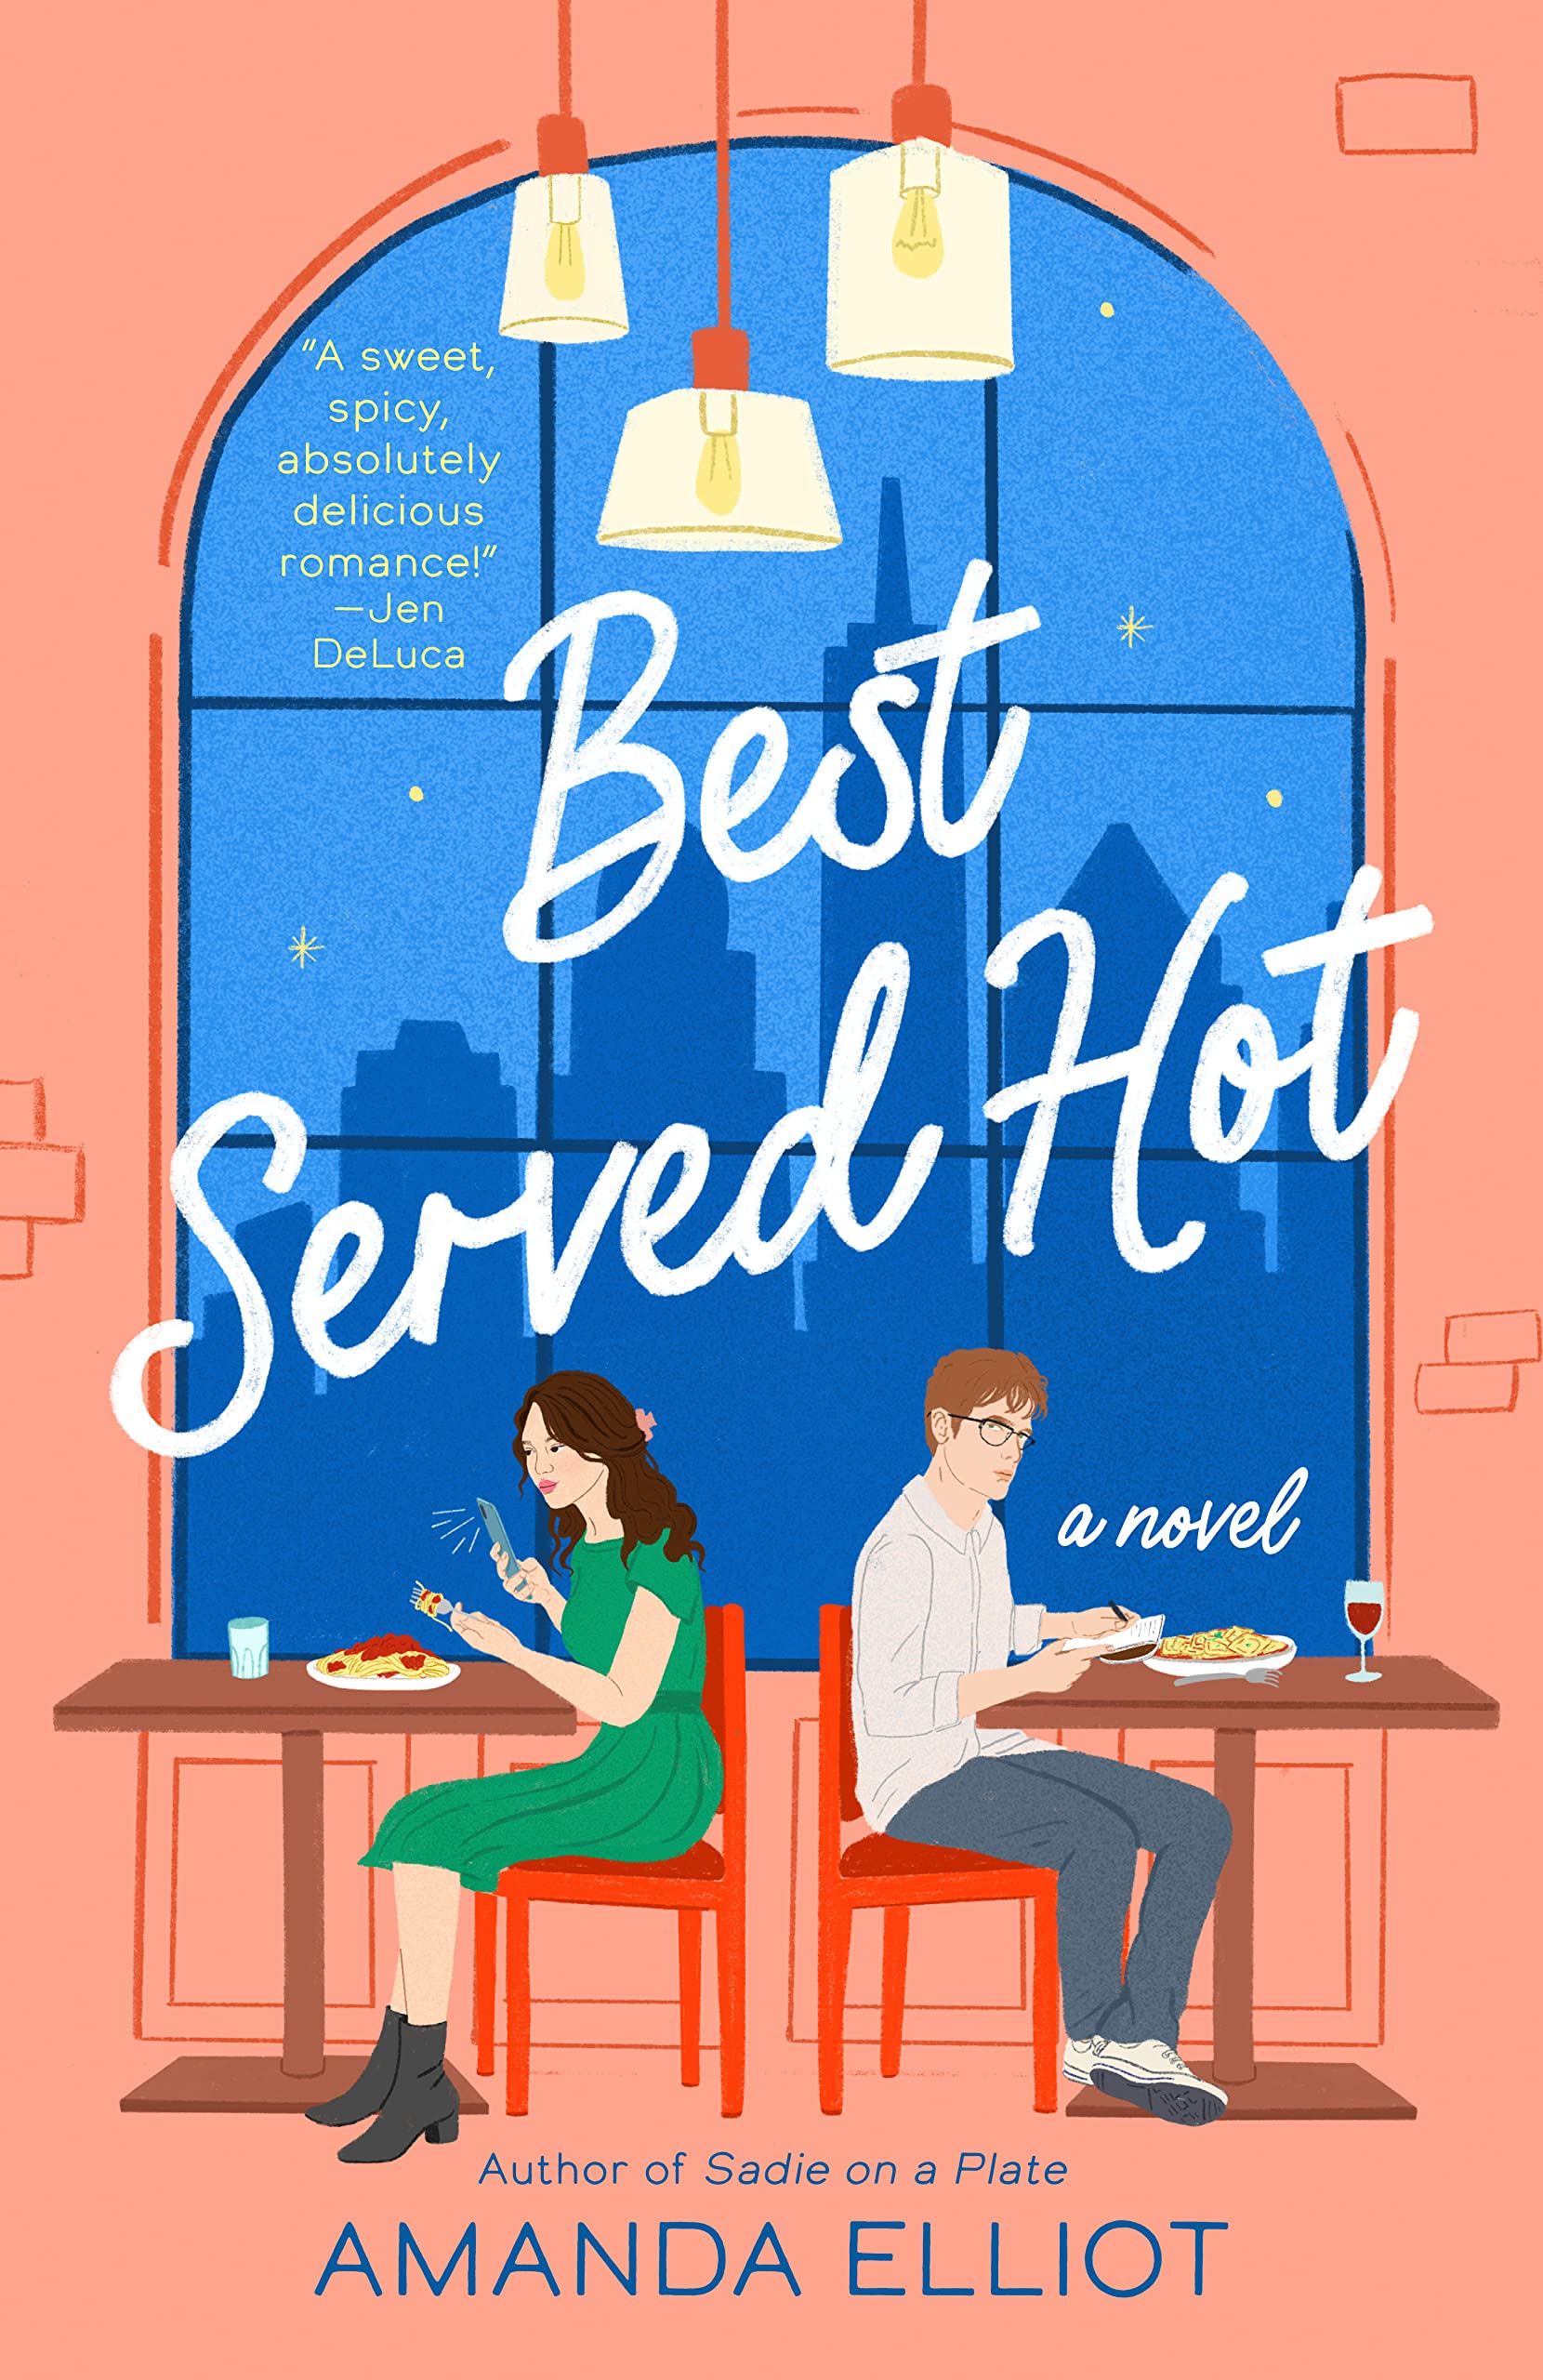 Image for "Best Served Hot"